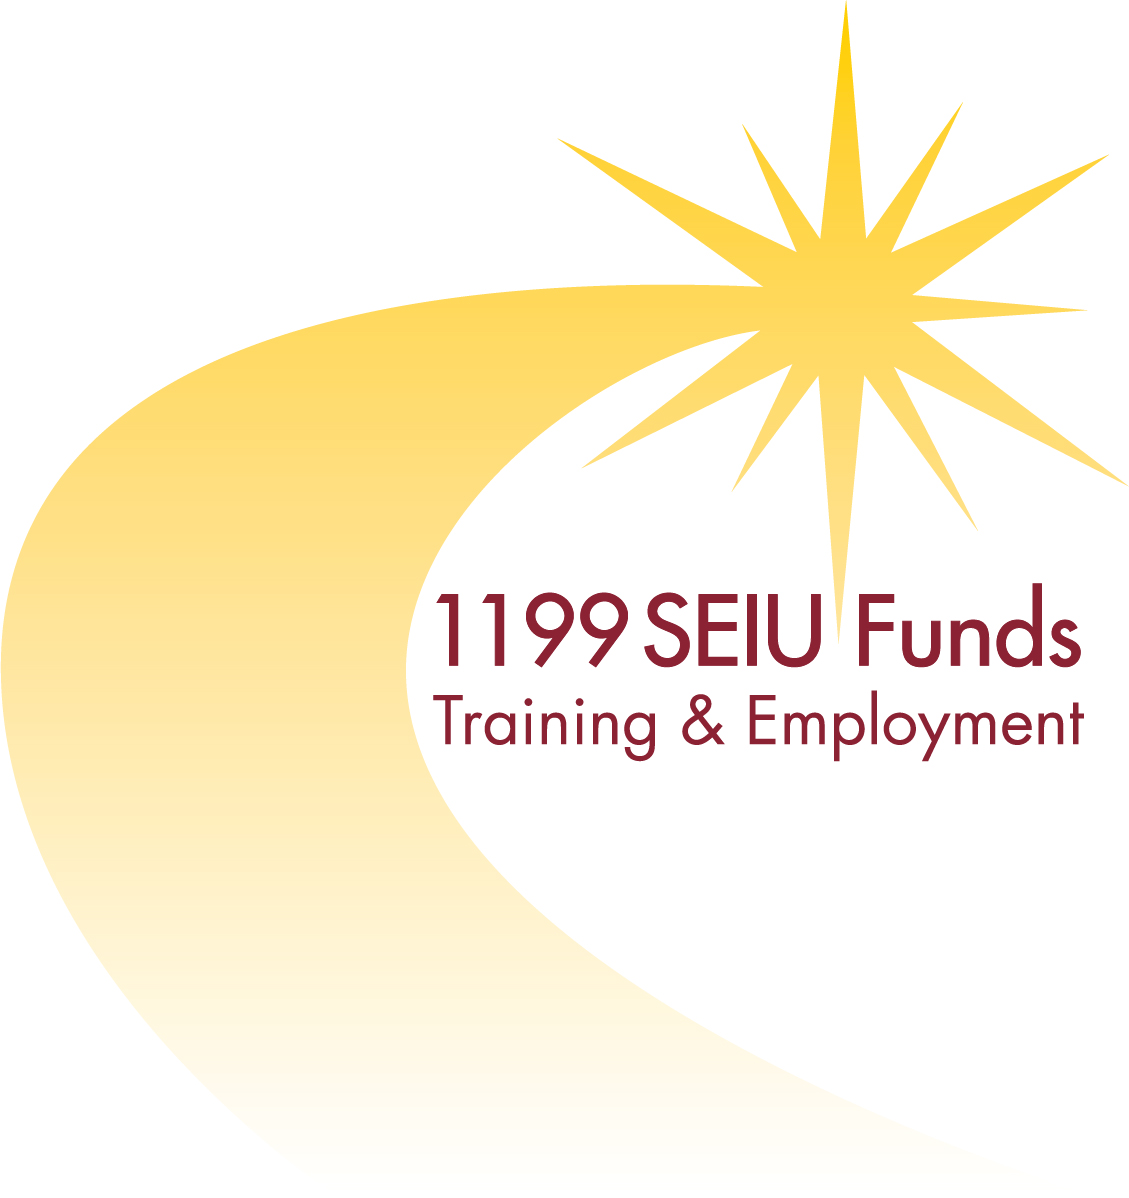 1199SEIU Training & Employment Funds